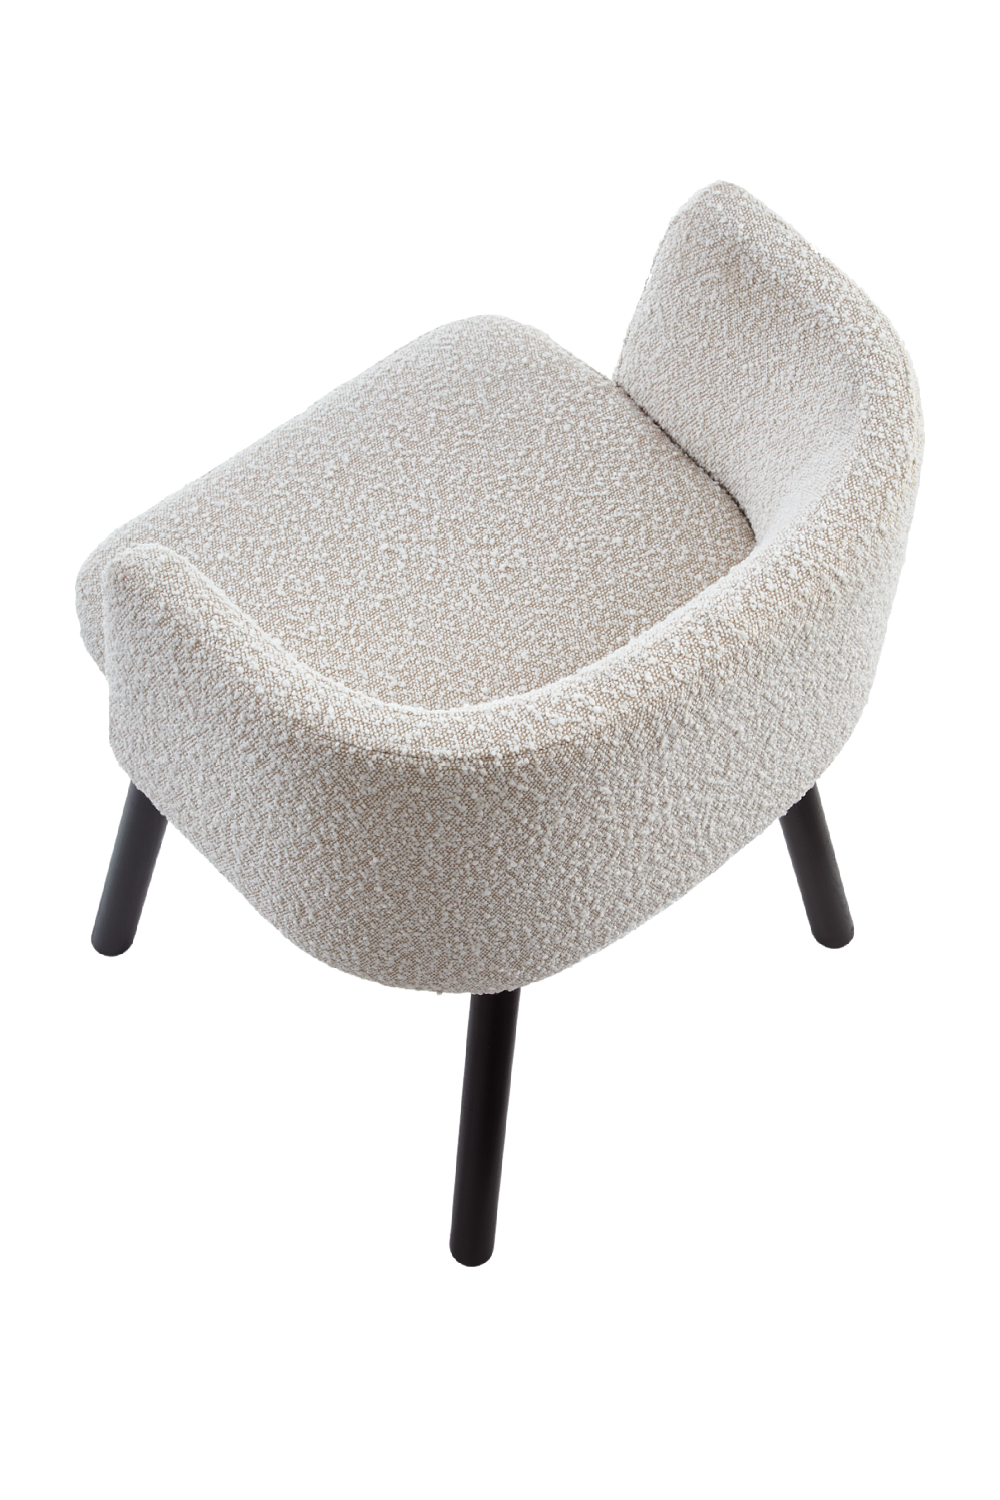 White Bouclé Contoured Dining Chair | Liang & Eimil Ethis | Oroa.com